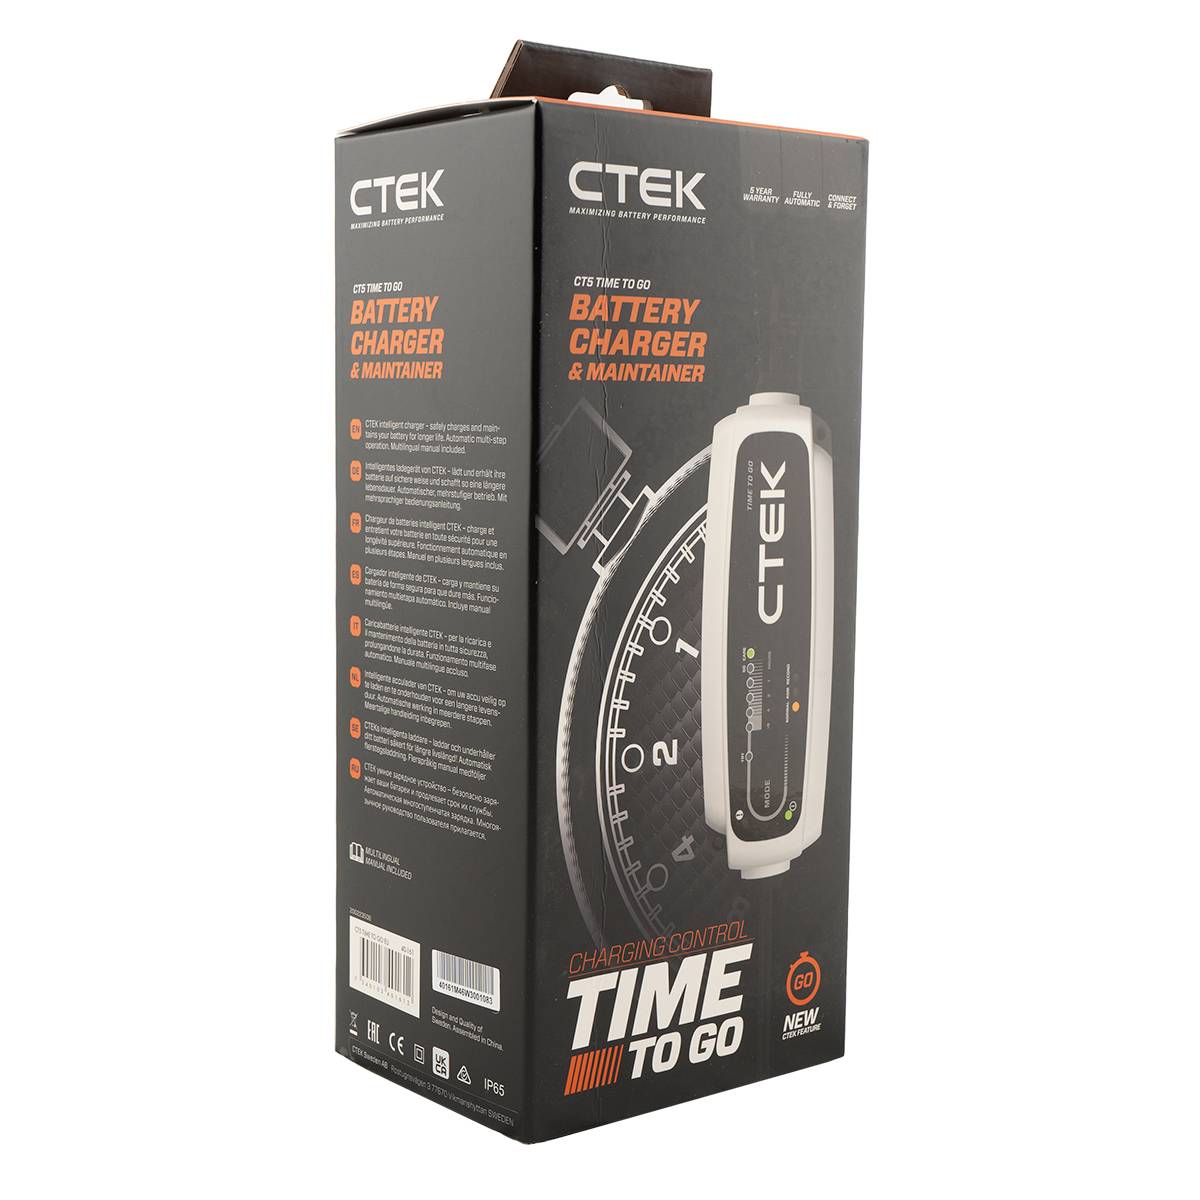 CTEK CT5 TIME TO GO EU Ladegerät für12V AGM Batterien